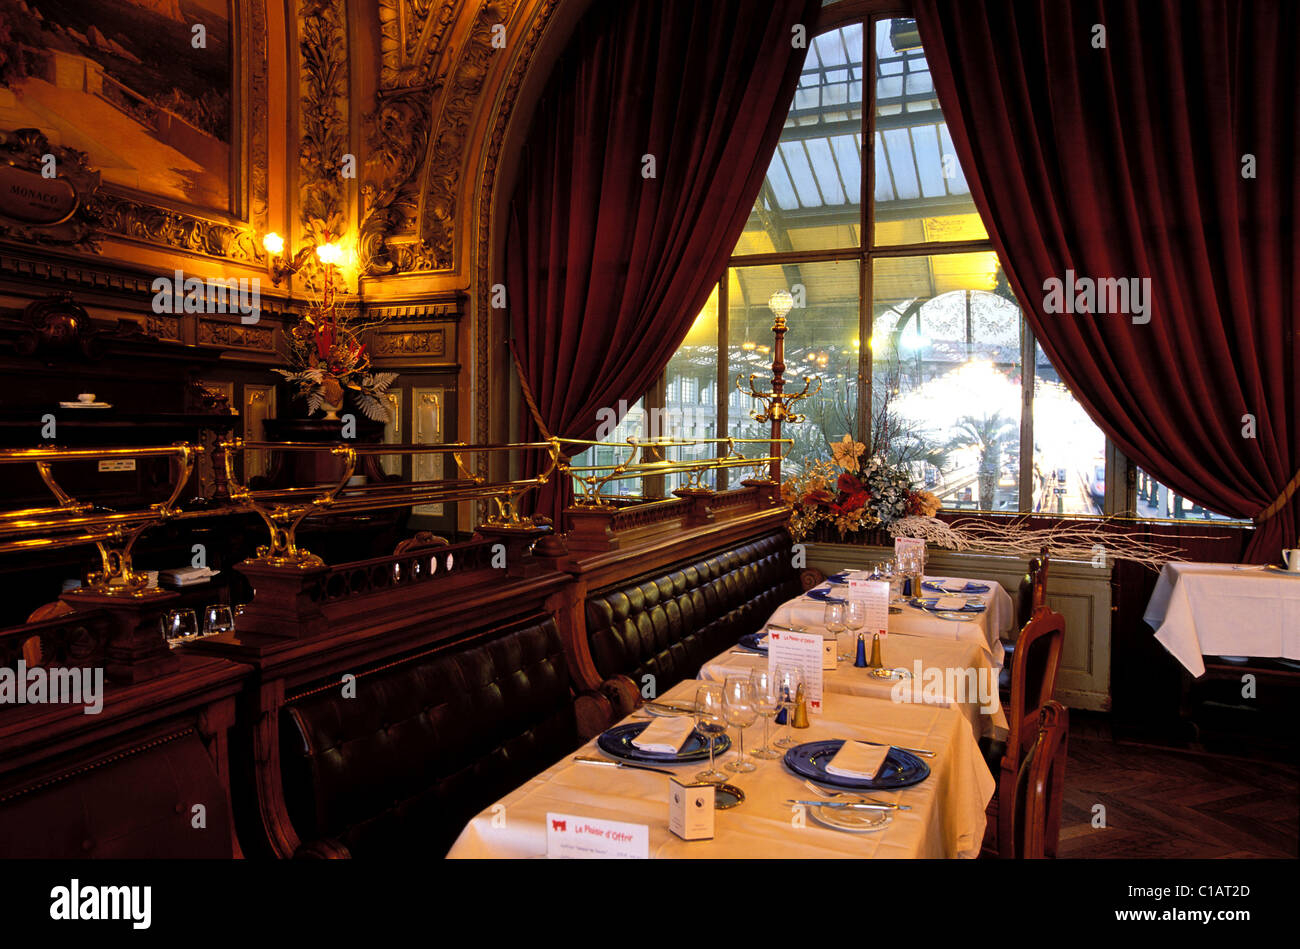 France, Paris, Train bleu restaurant at the Gare de Lyon (Lyon train station) Stock Photo